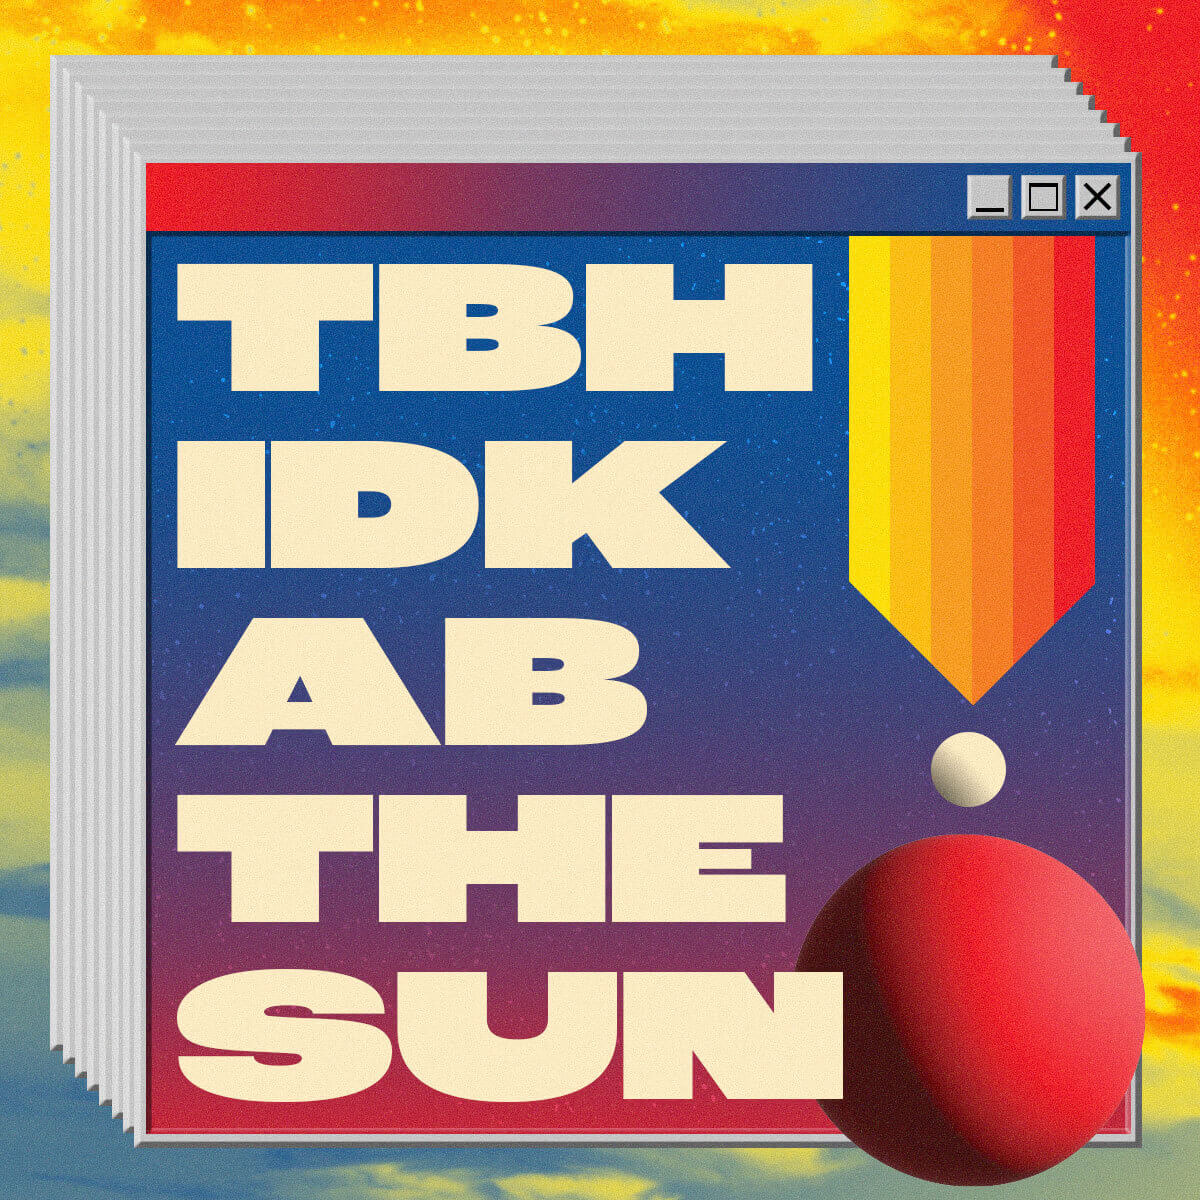 TBH IDK AB The Sun wallpaper version